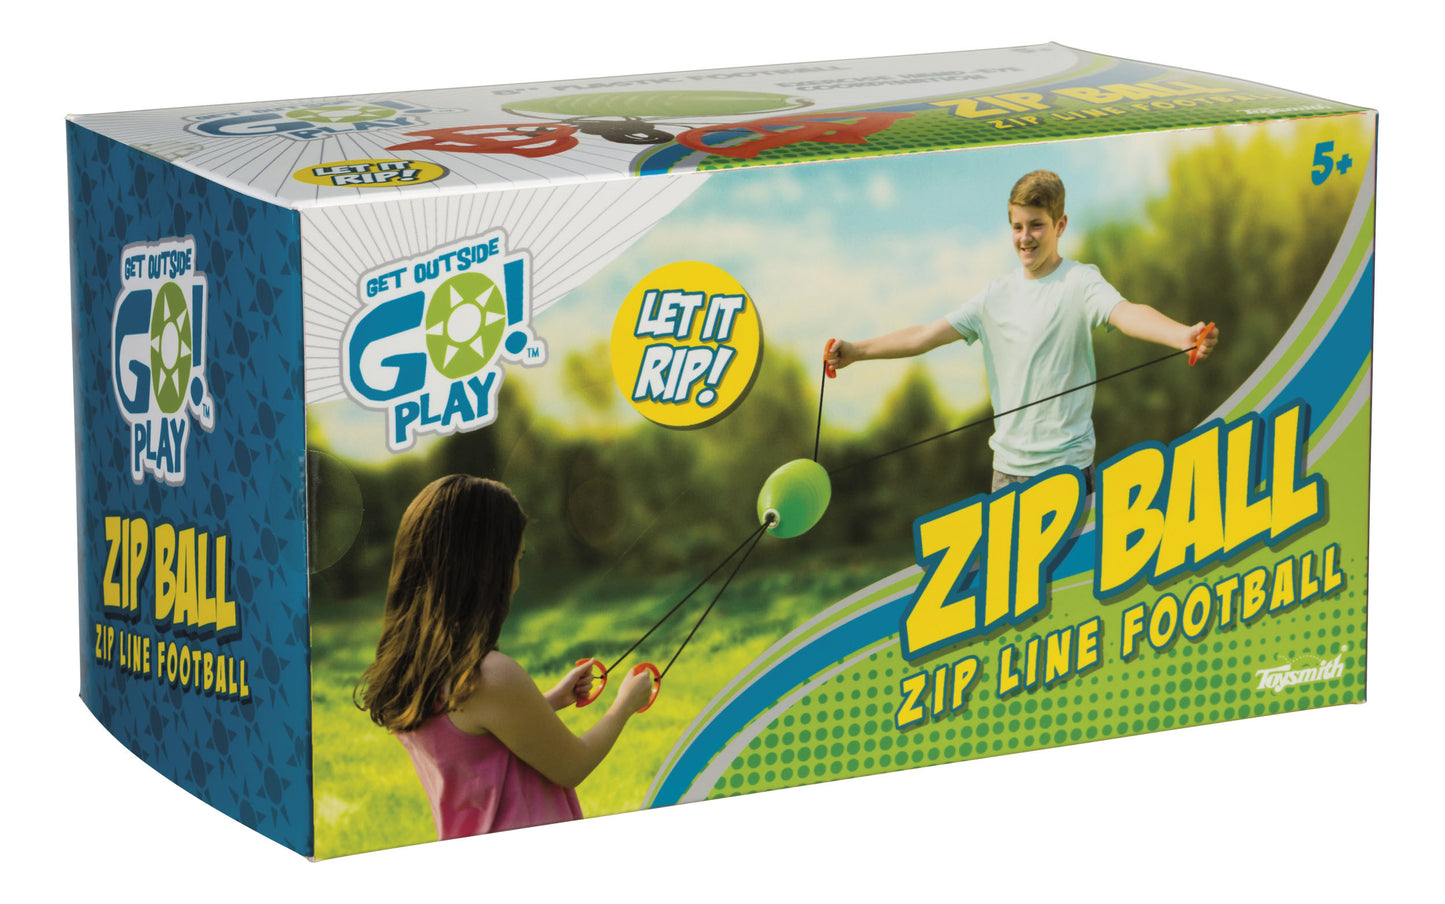 GO! Play Zip Ball